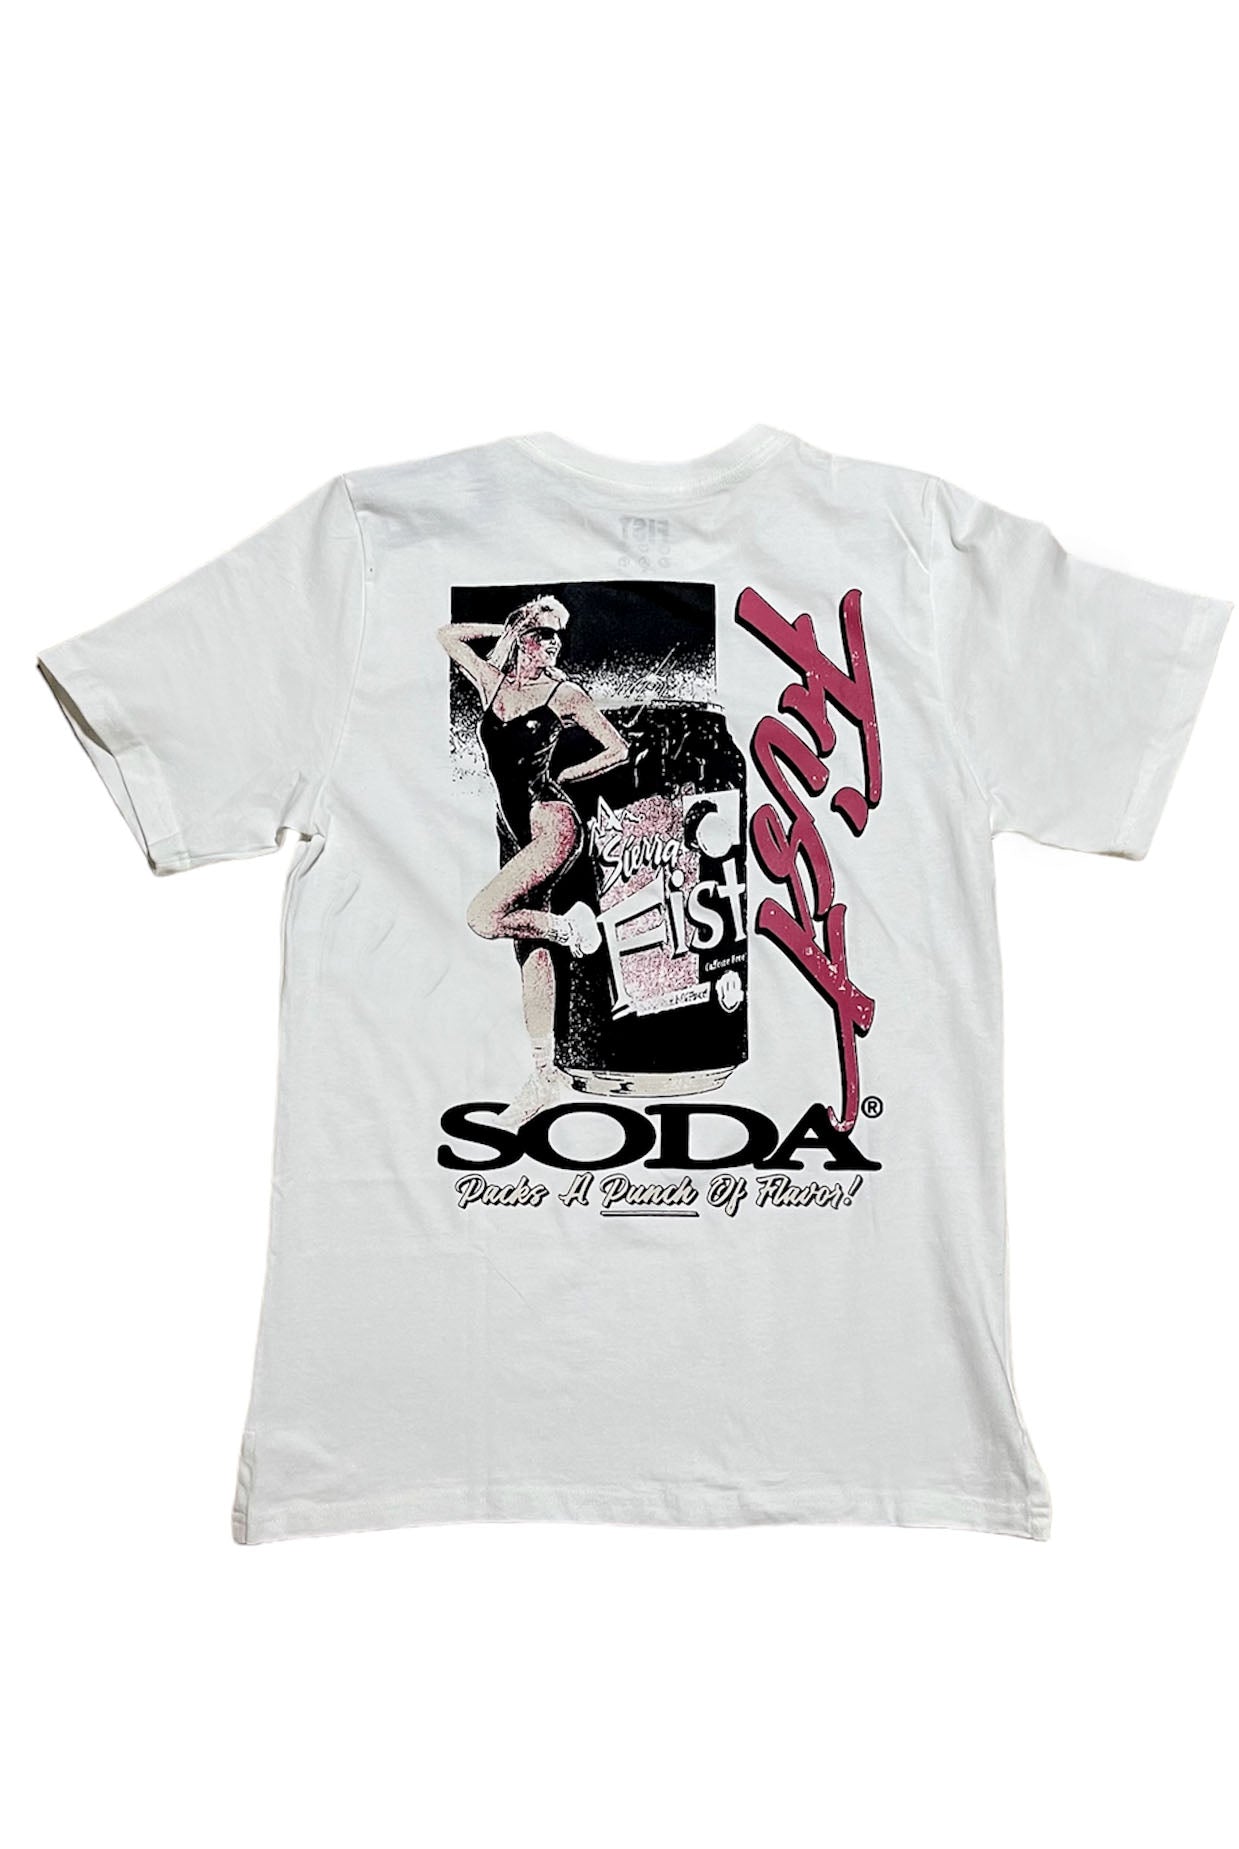 Camiseta Fist Soda